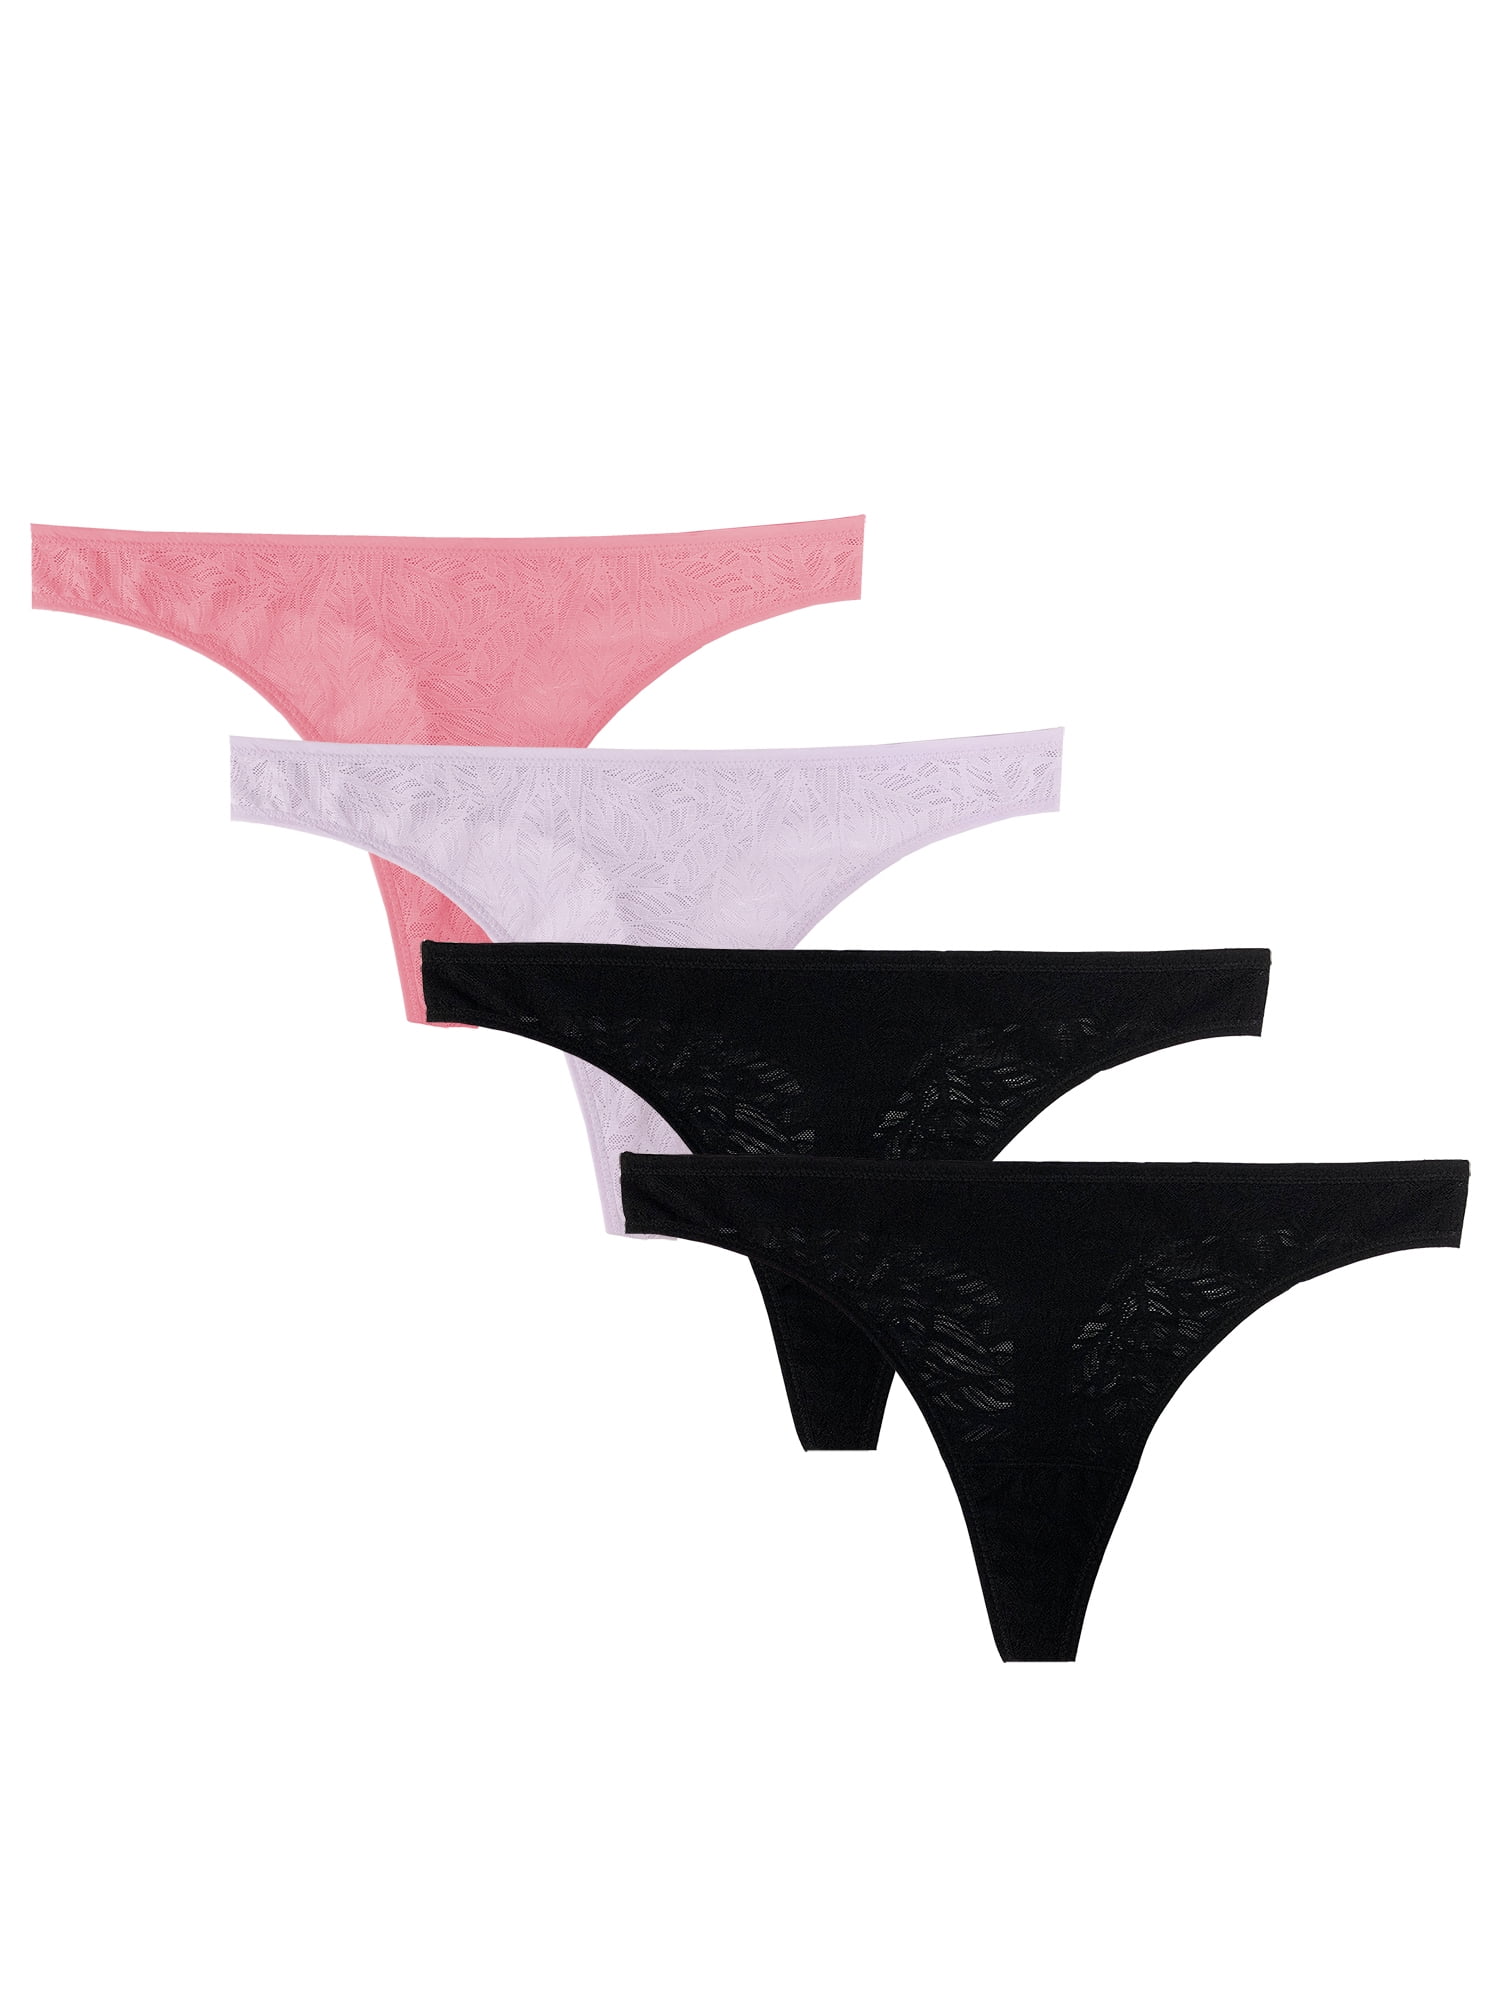 Wealurre Cotton Panties for Women Bikini Underwear Uganda